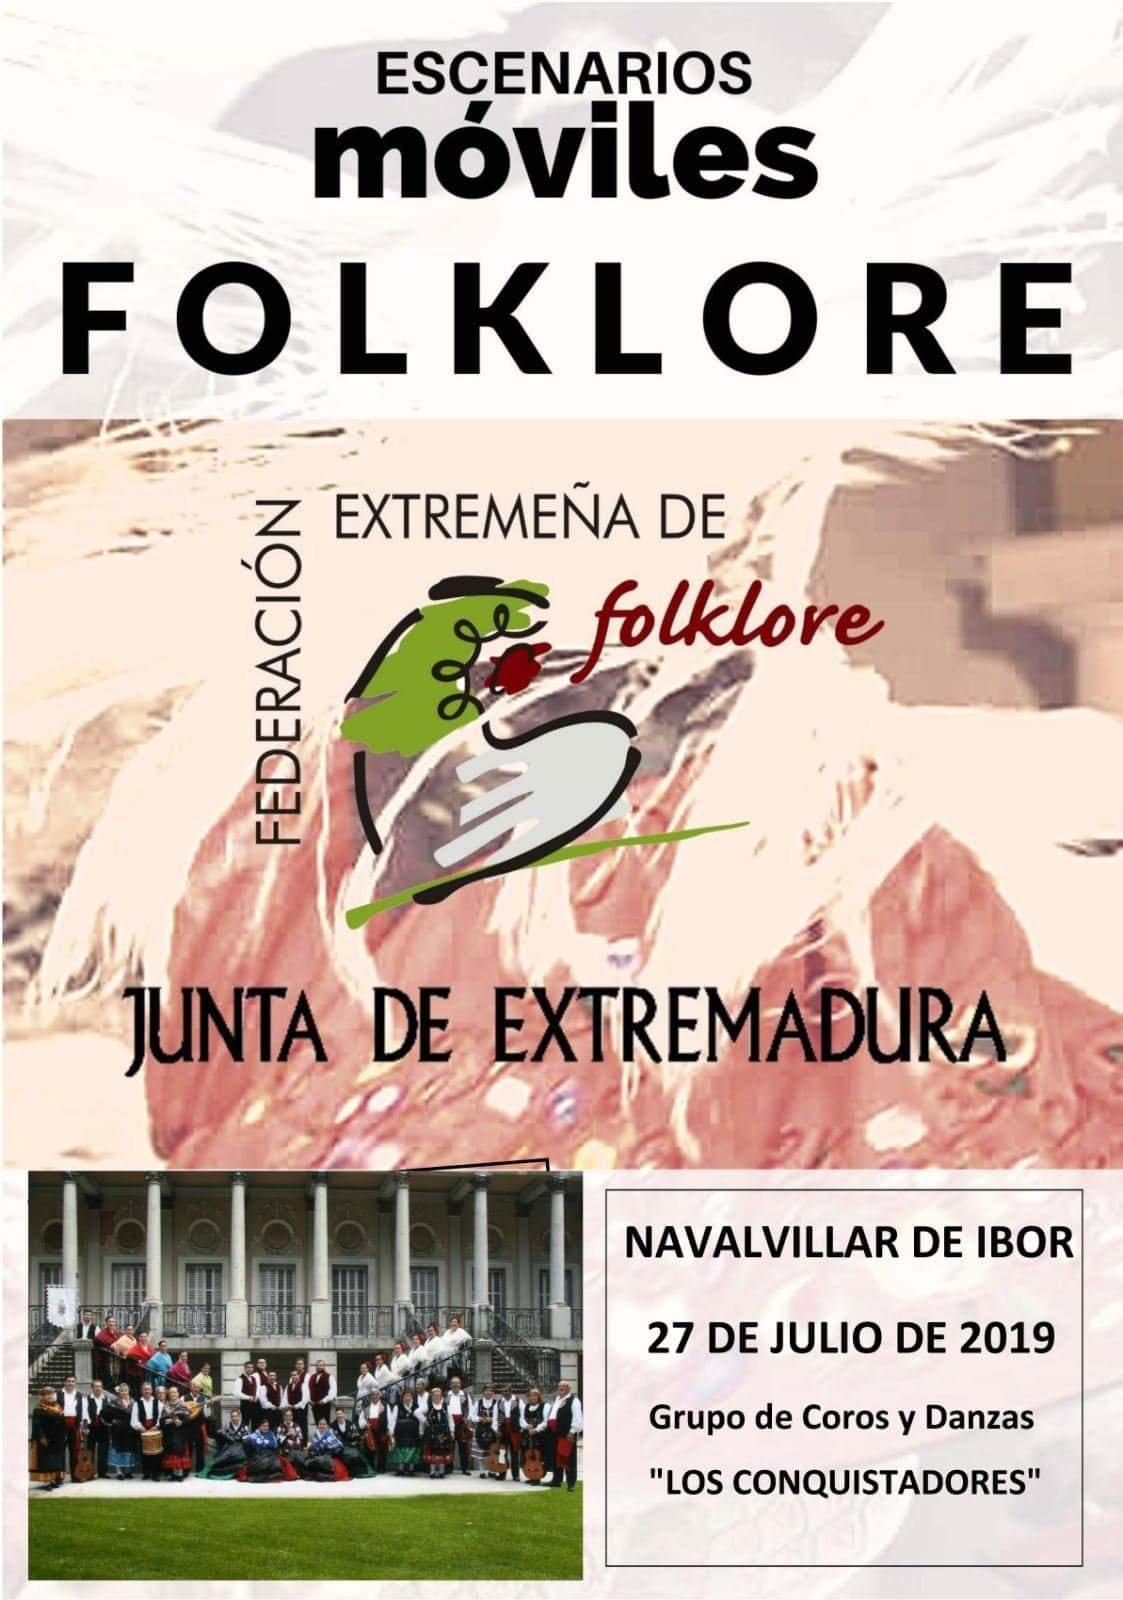 Escenarios móviles folklore 2019 - Navalvillar de Ibor (Cáceres)